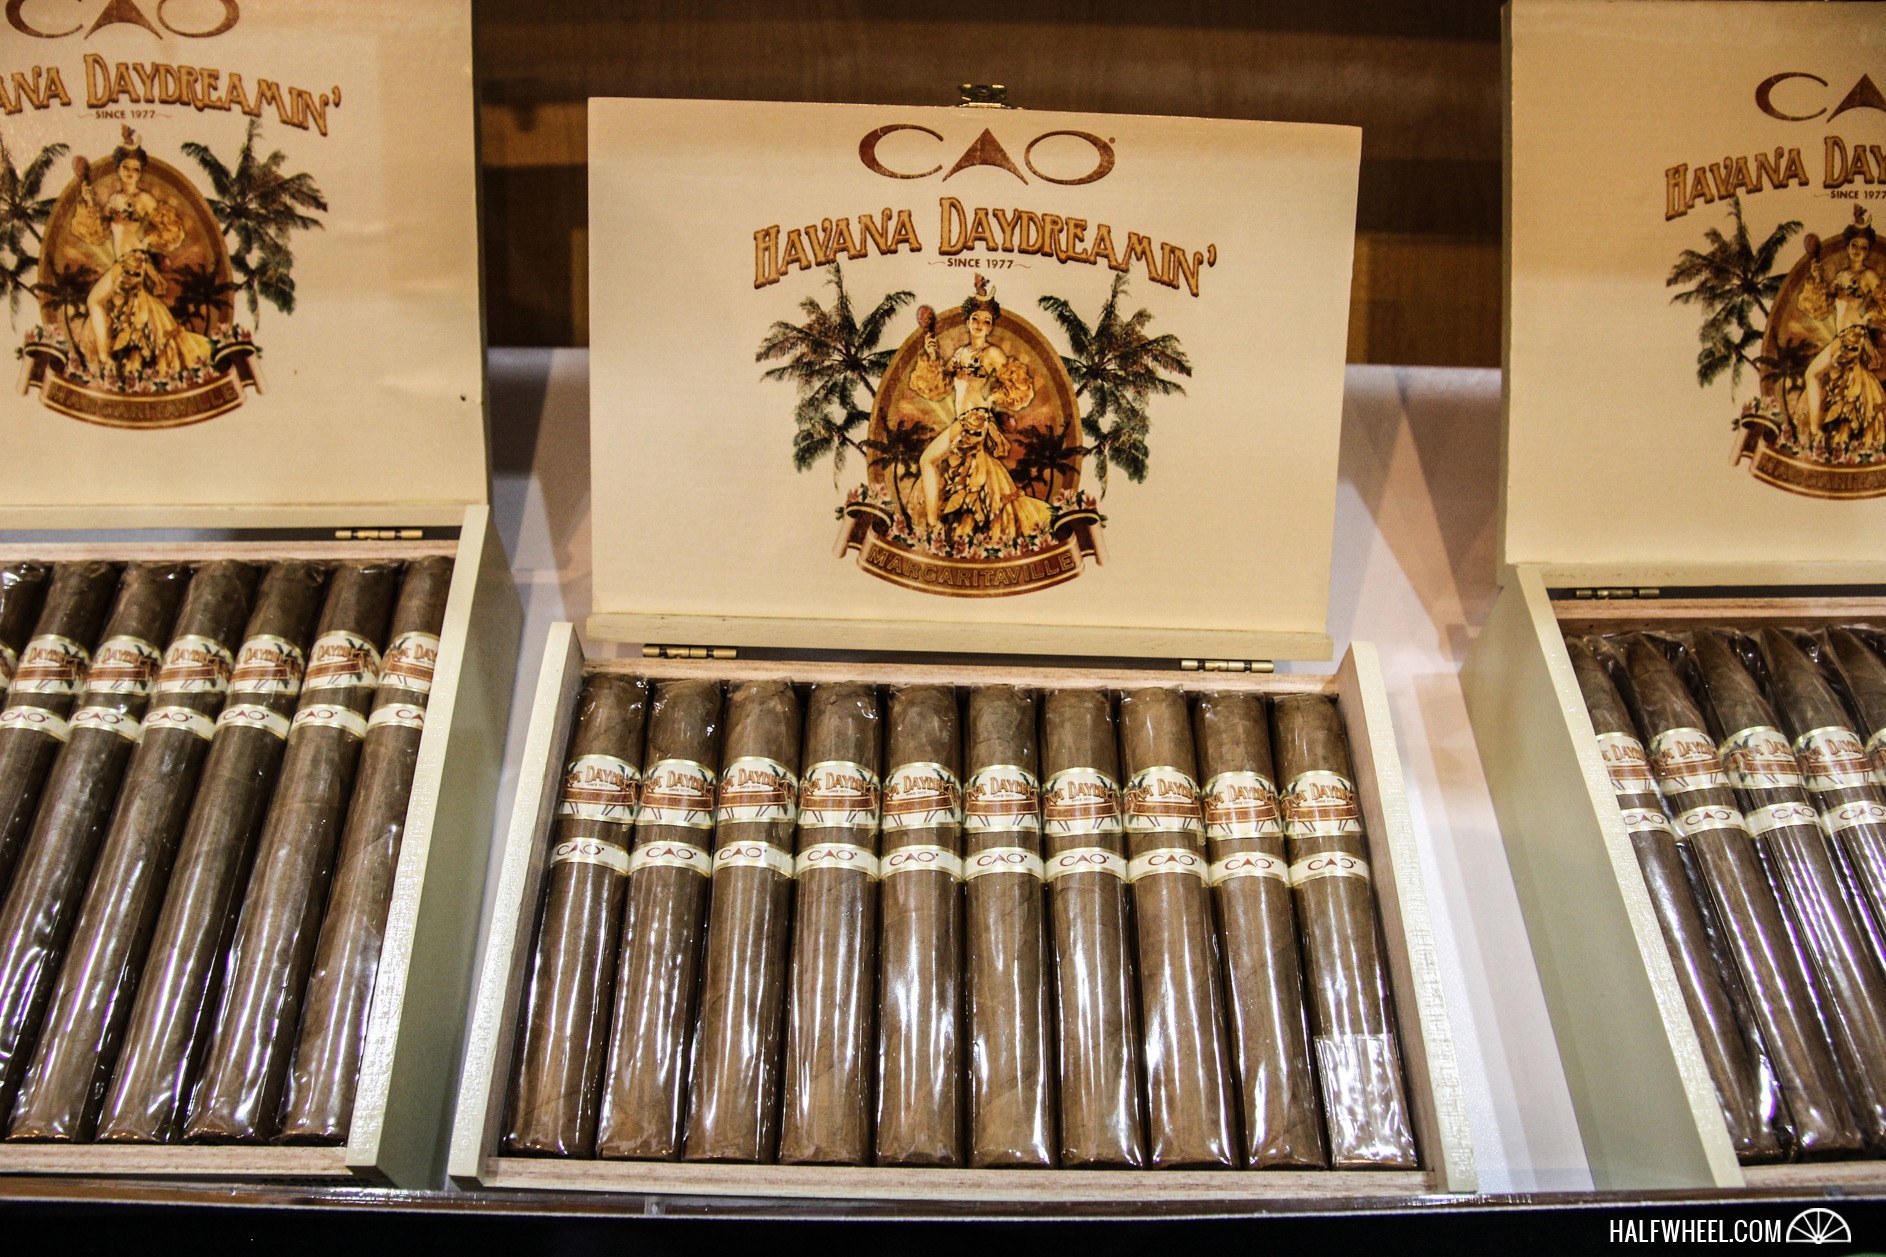 General Cigar Co CAO Havana Daydreamin